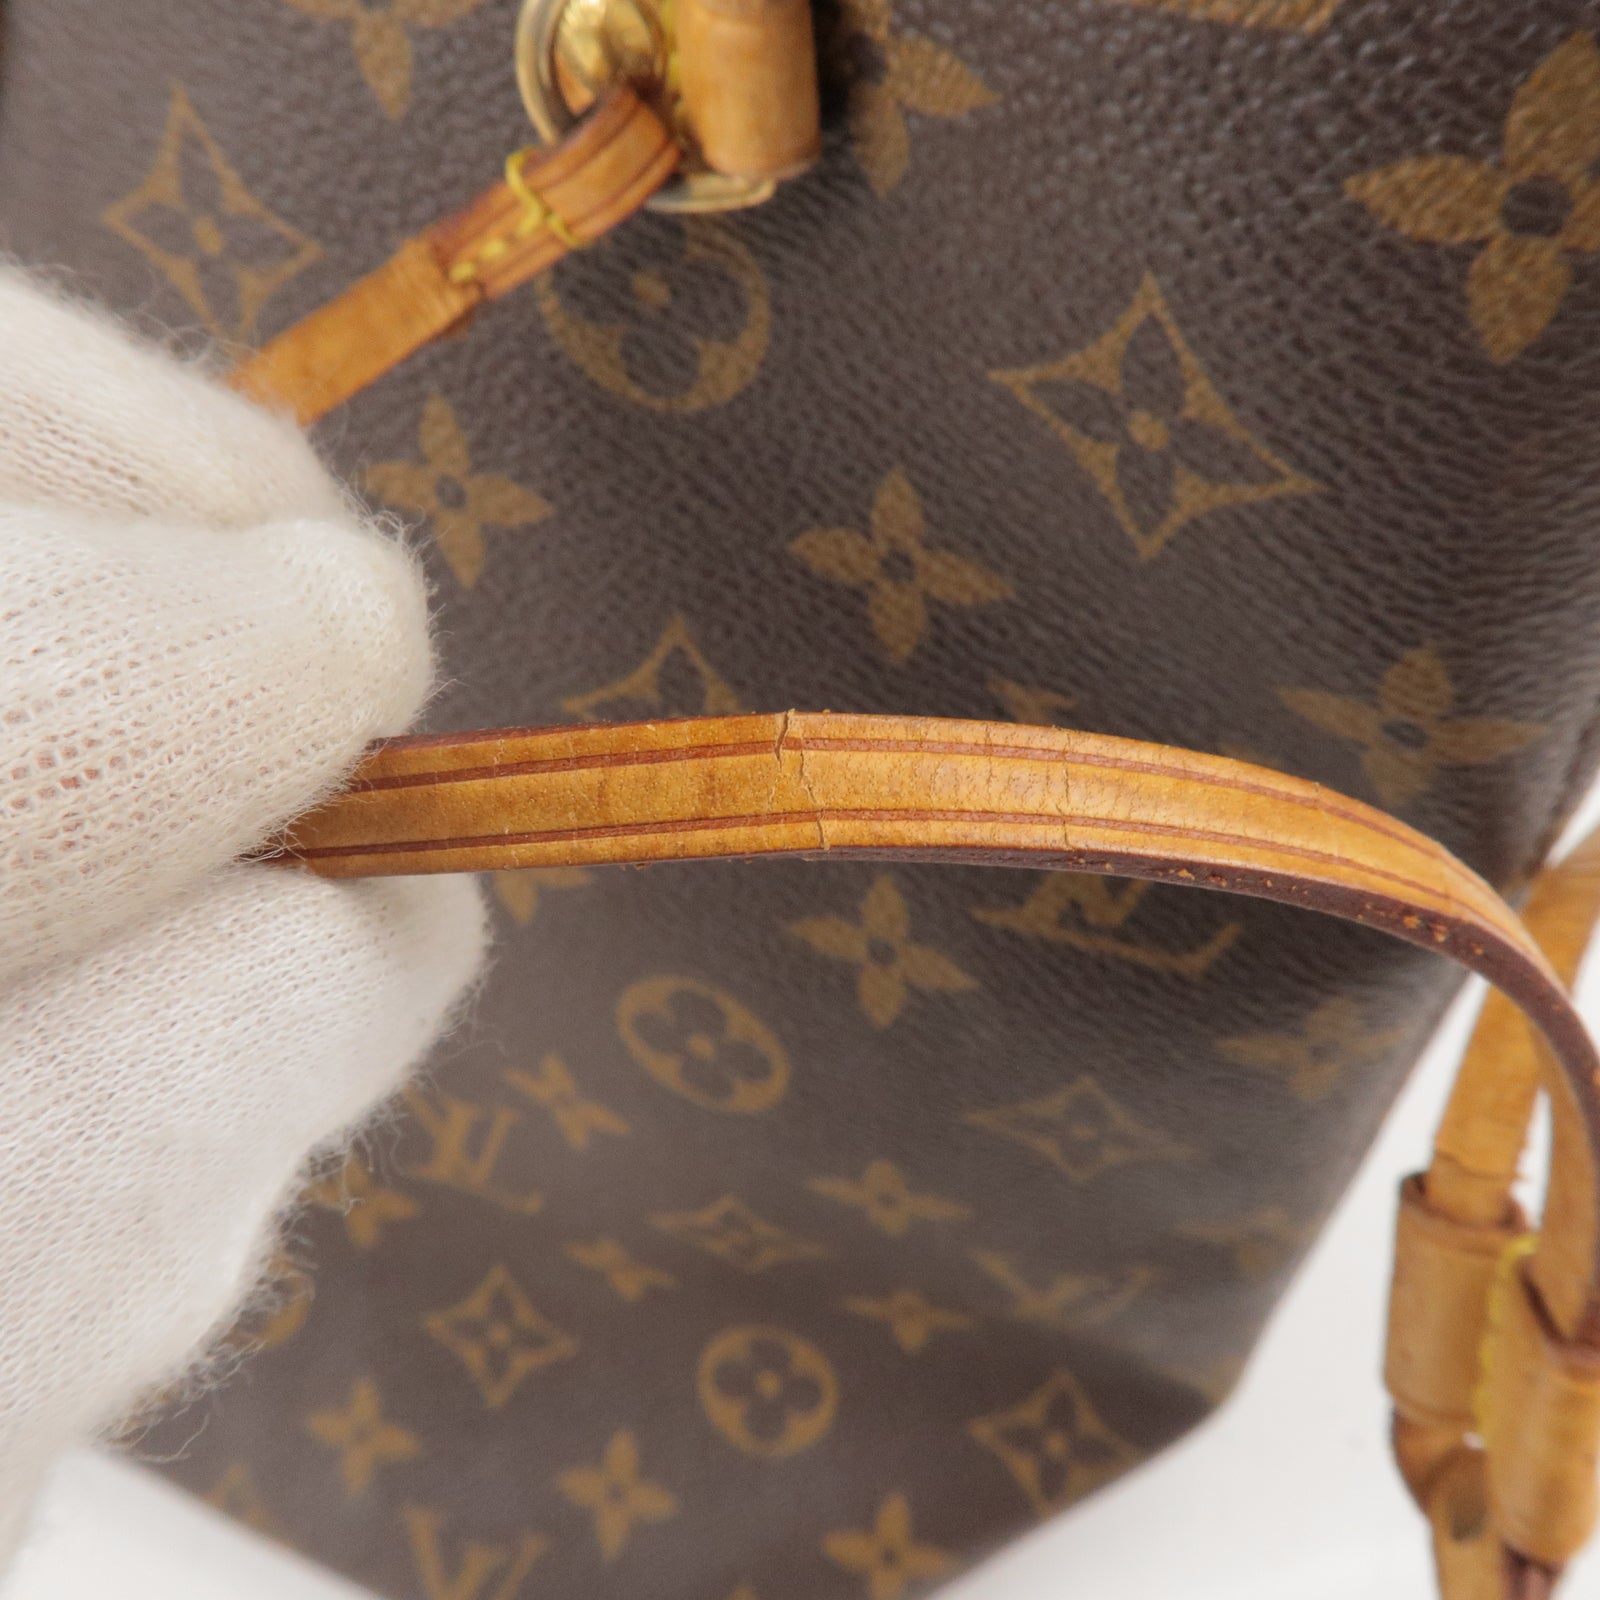 Louis Vuitton M40156 Neverfull MM Women's Tote Bag